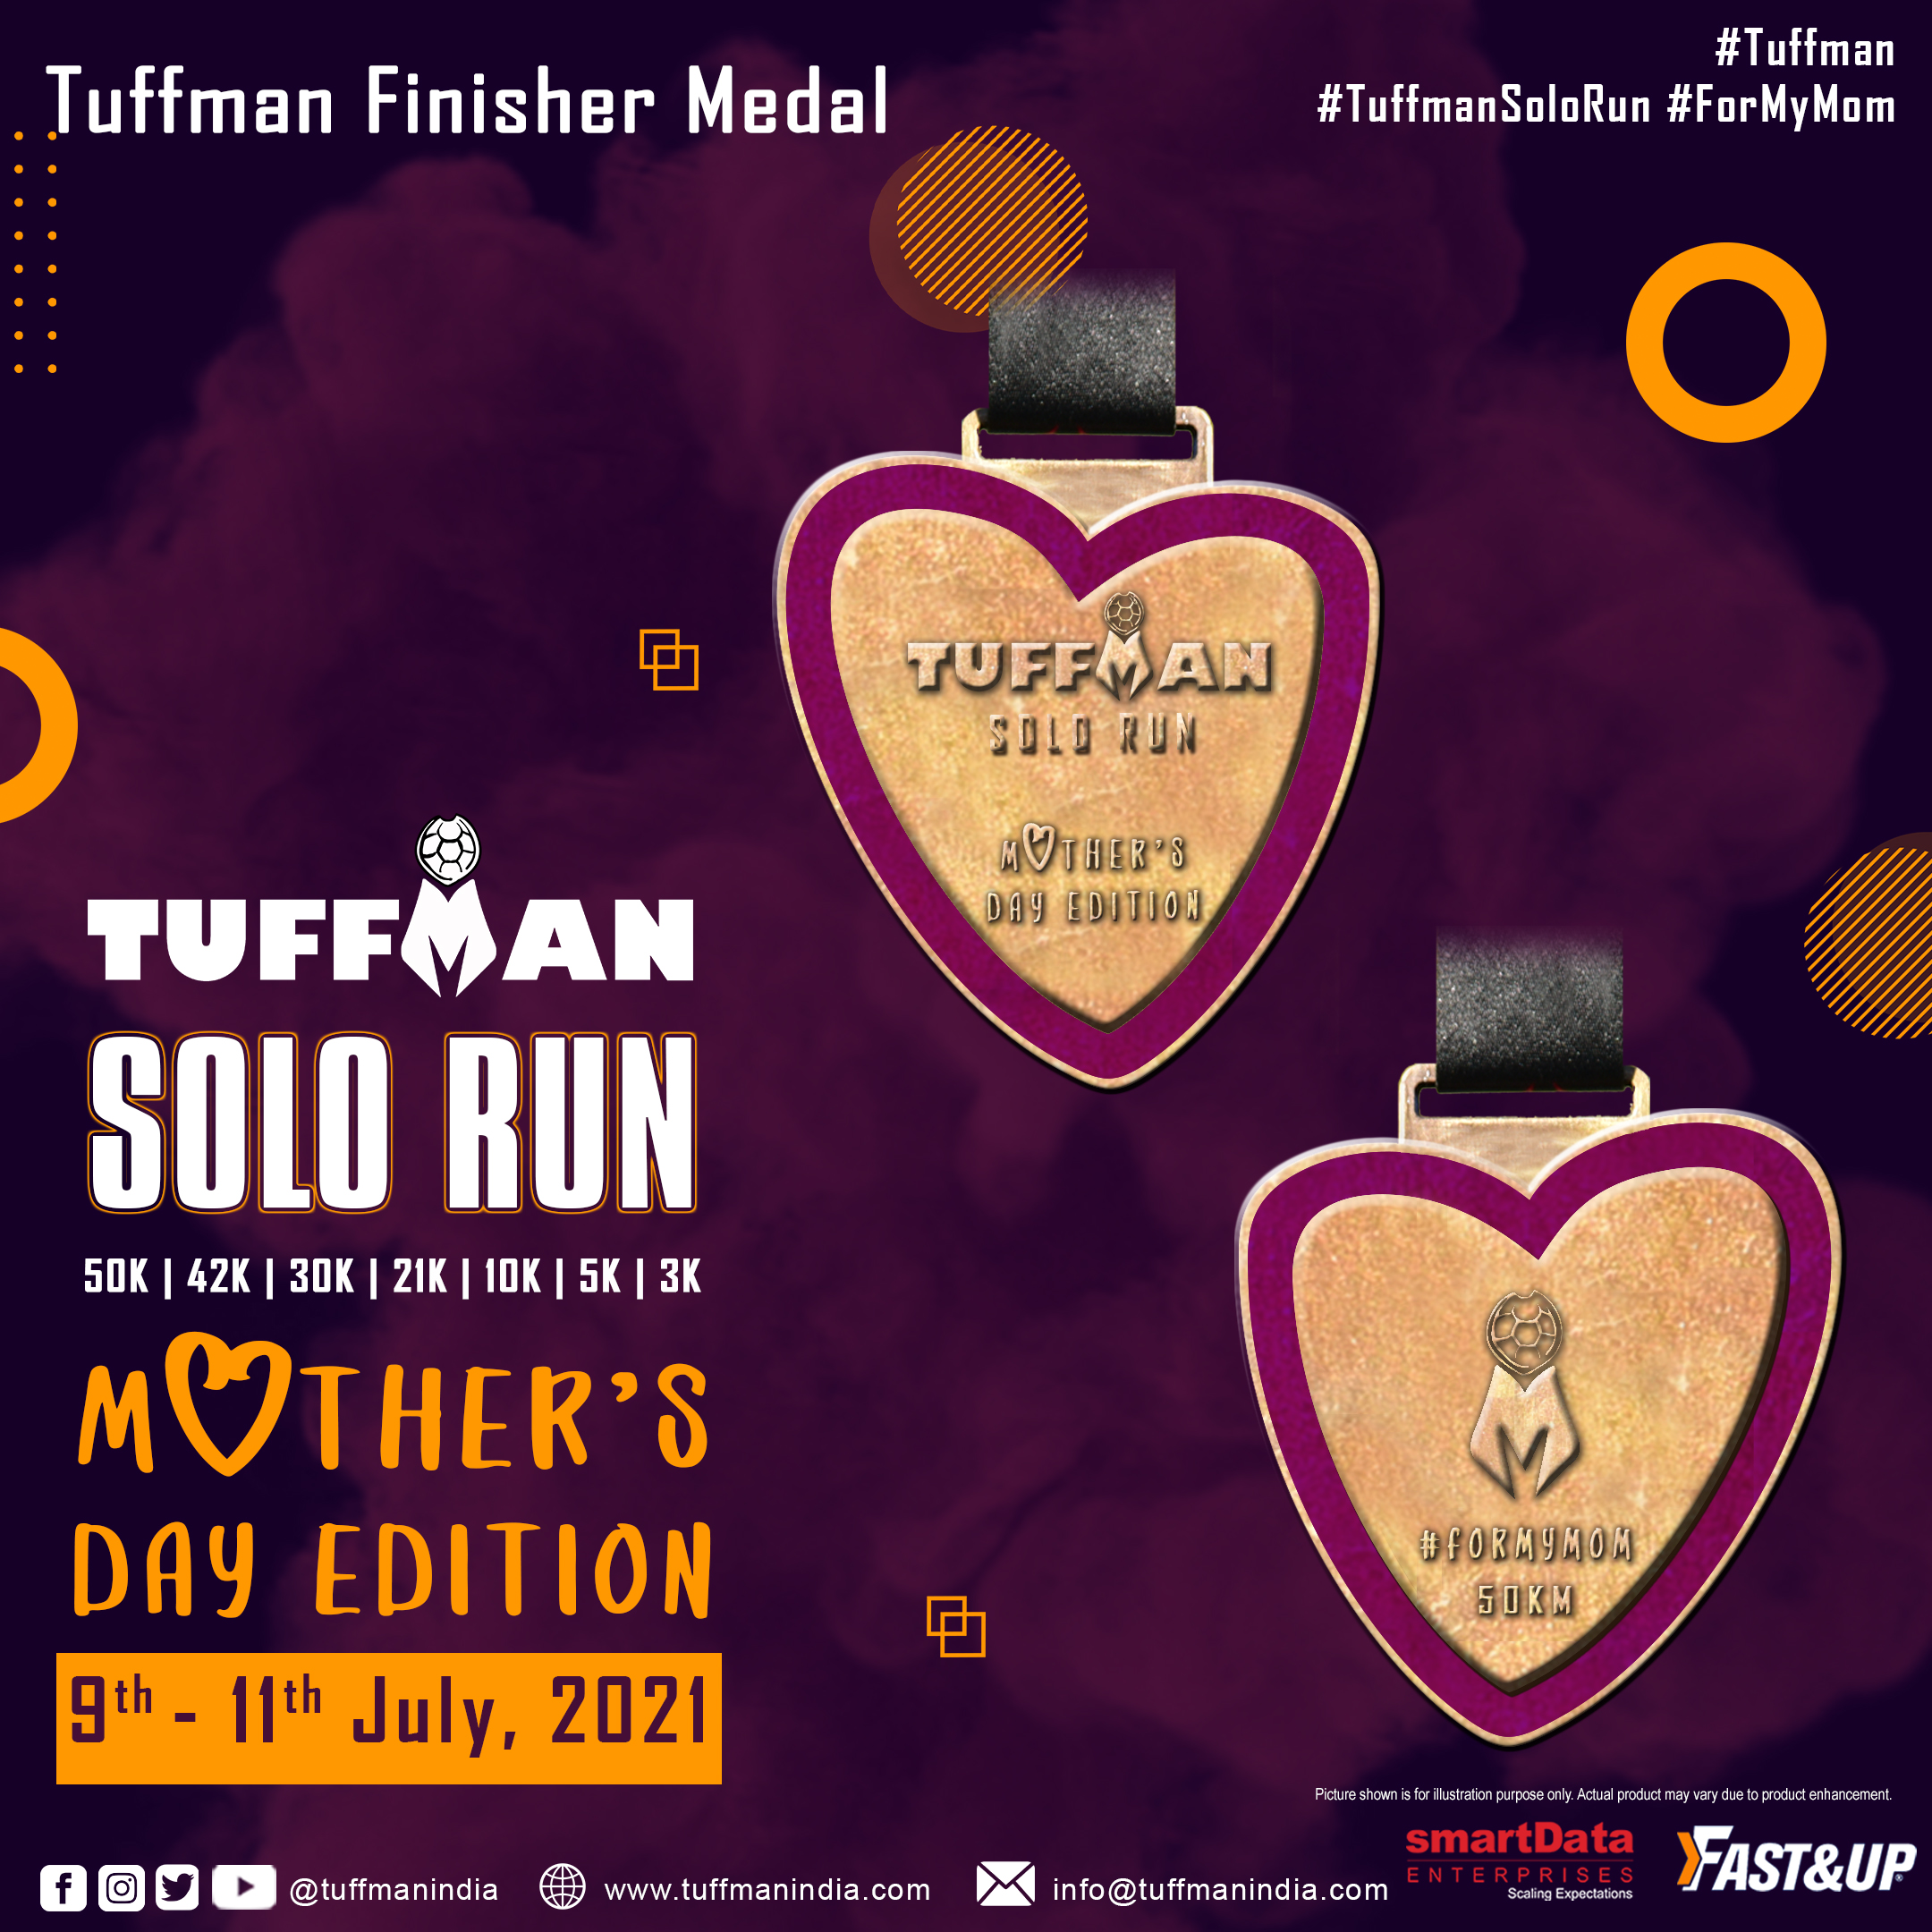 Tuffman Finisher Medal